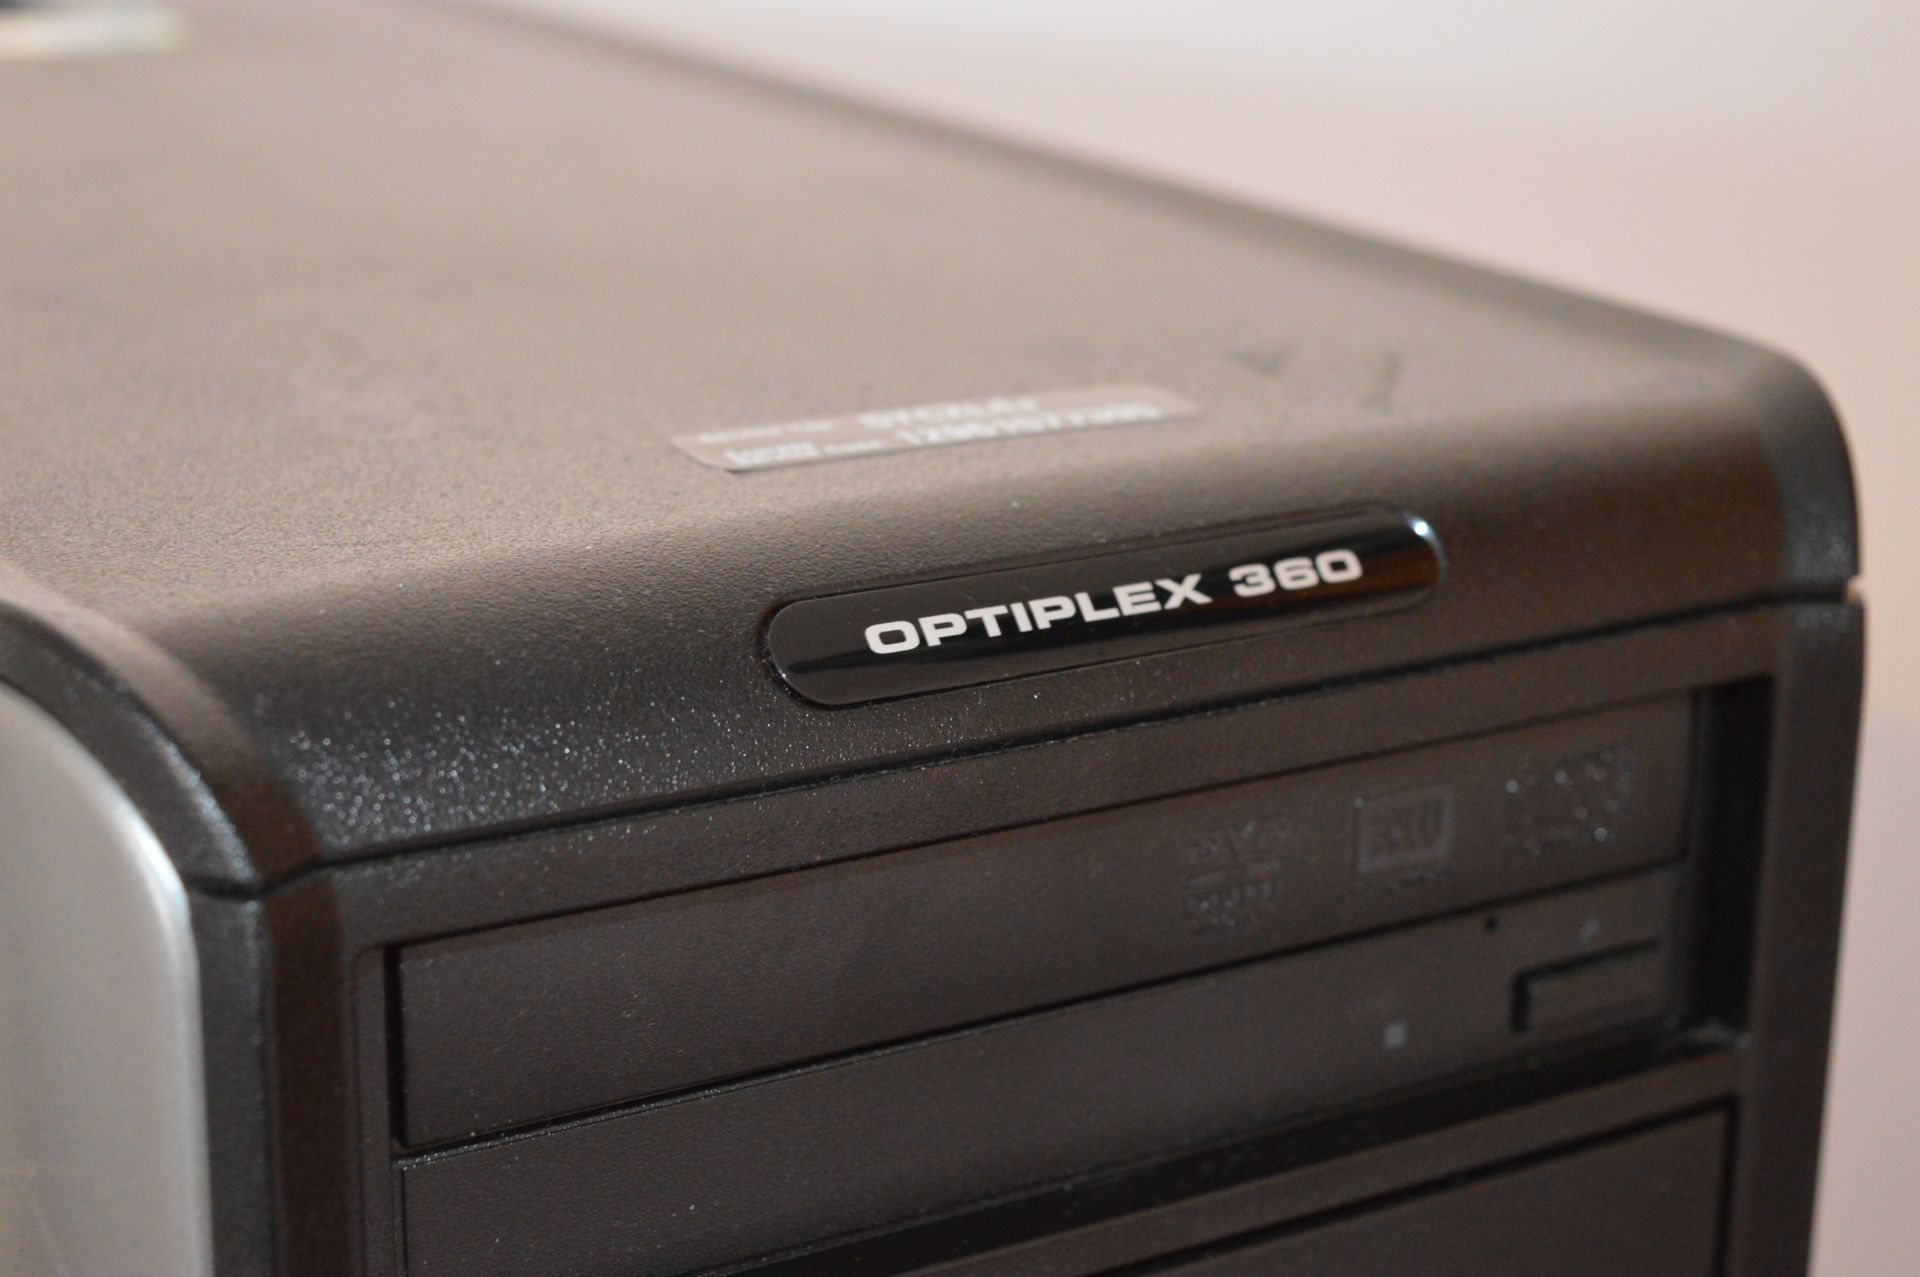 1 x Dell Optiplex 360 Desktop Computer - Features Intel 2.6ghz Dual Core Processor, 2gb Ram and - Image 2 of 3